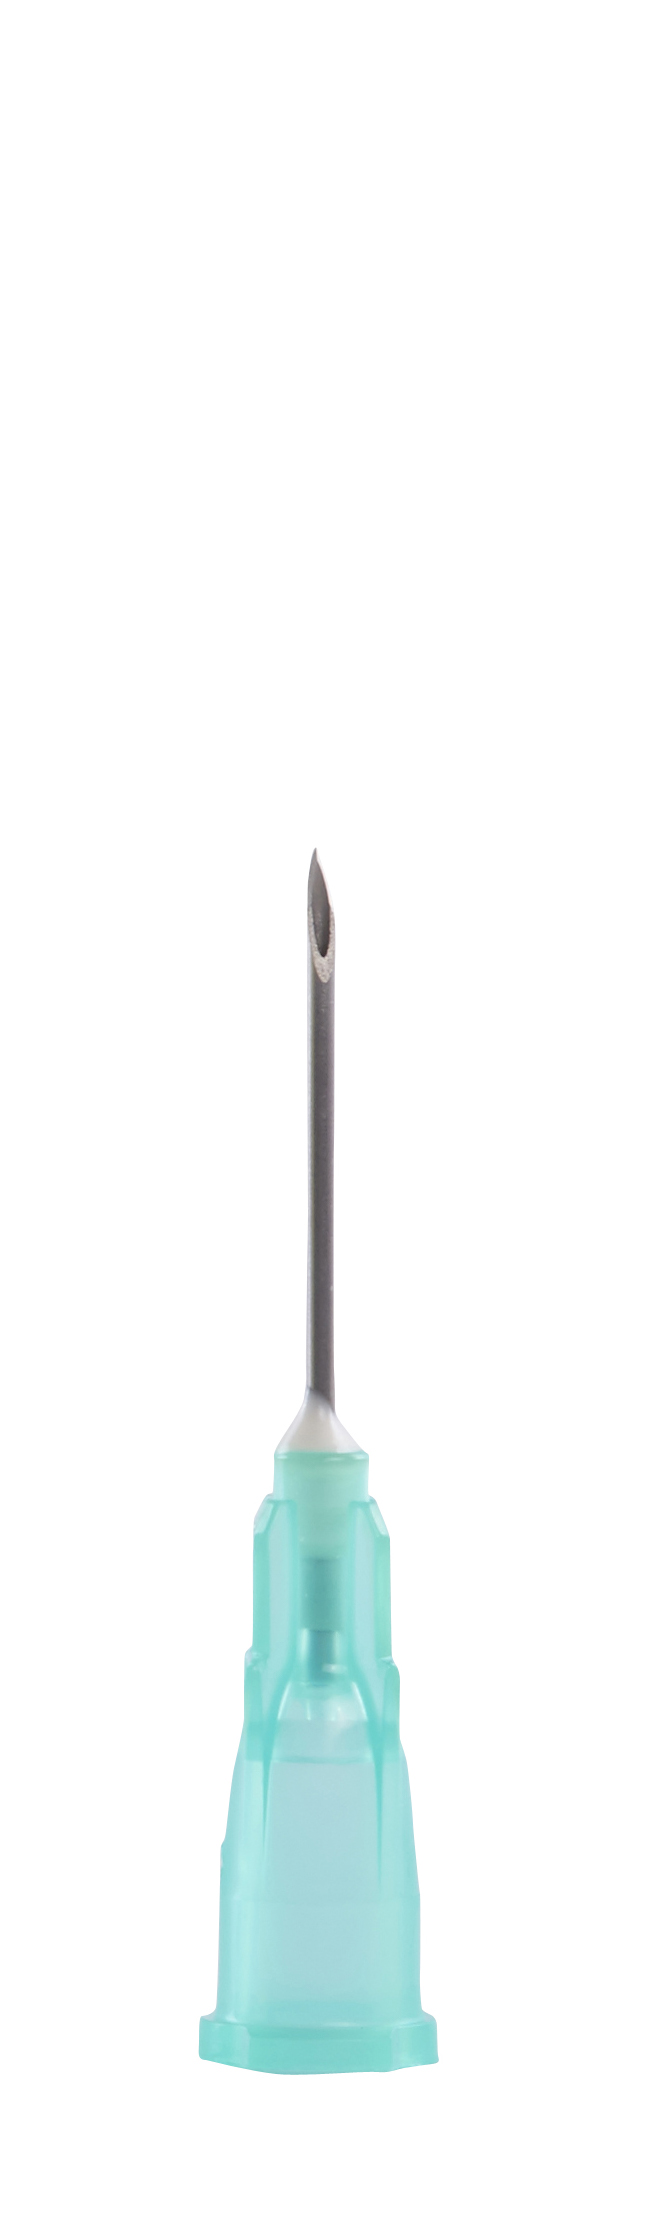 KRUUSE Disposable Needle, 0.8 x 16 mm, 21G x 5/8, green, 100/pk